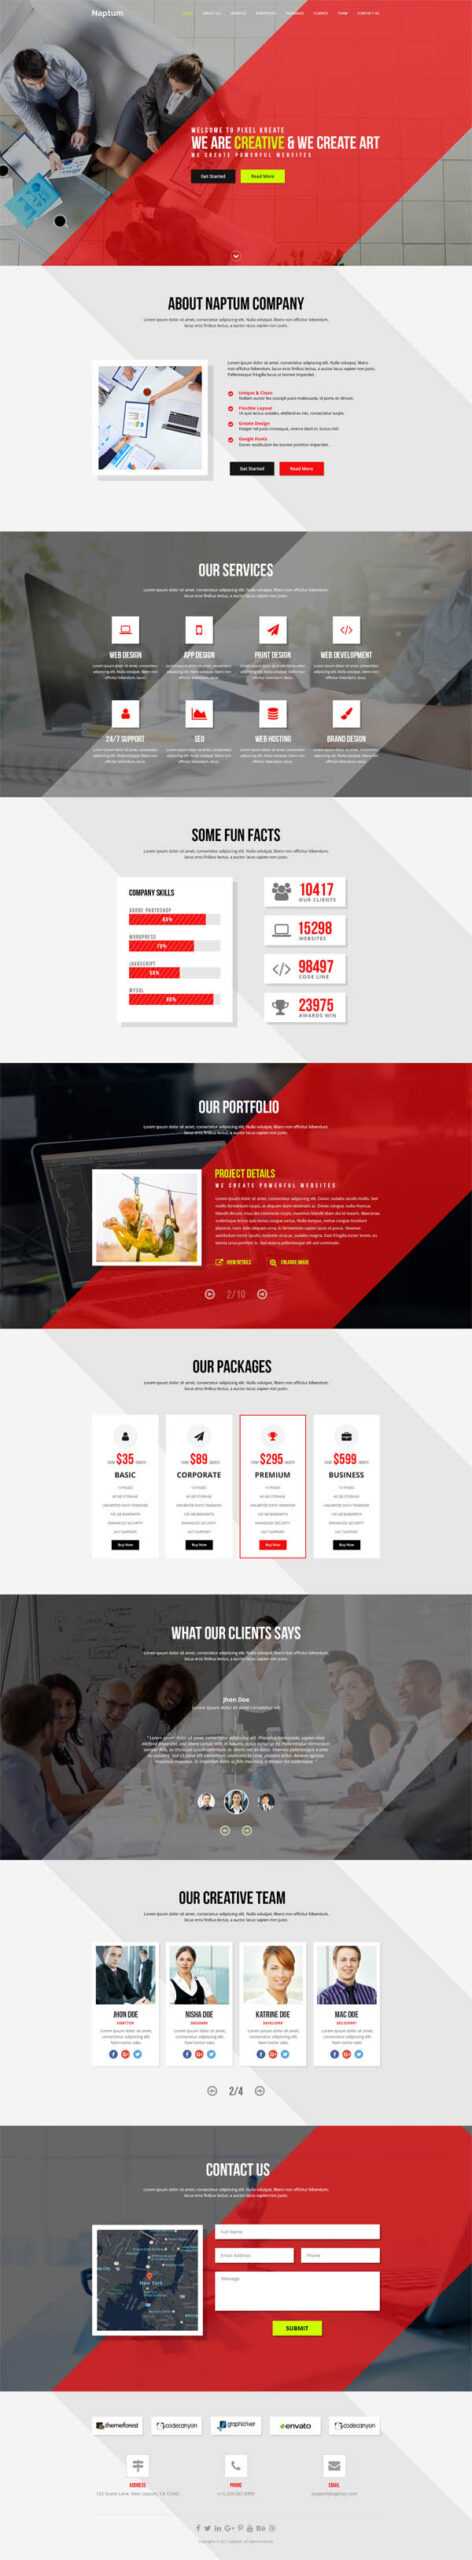 Best Single Page Web Templates | Web Design | Graphic Design Regarding Single Page Brochure Templates Psd